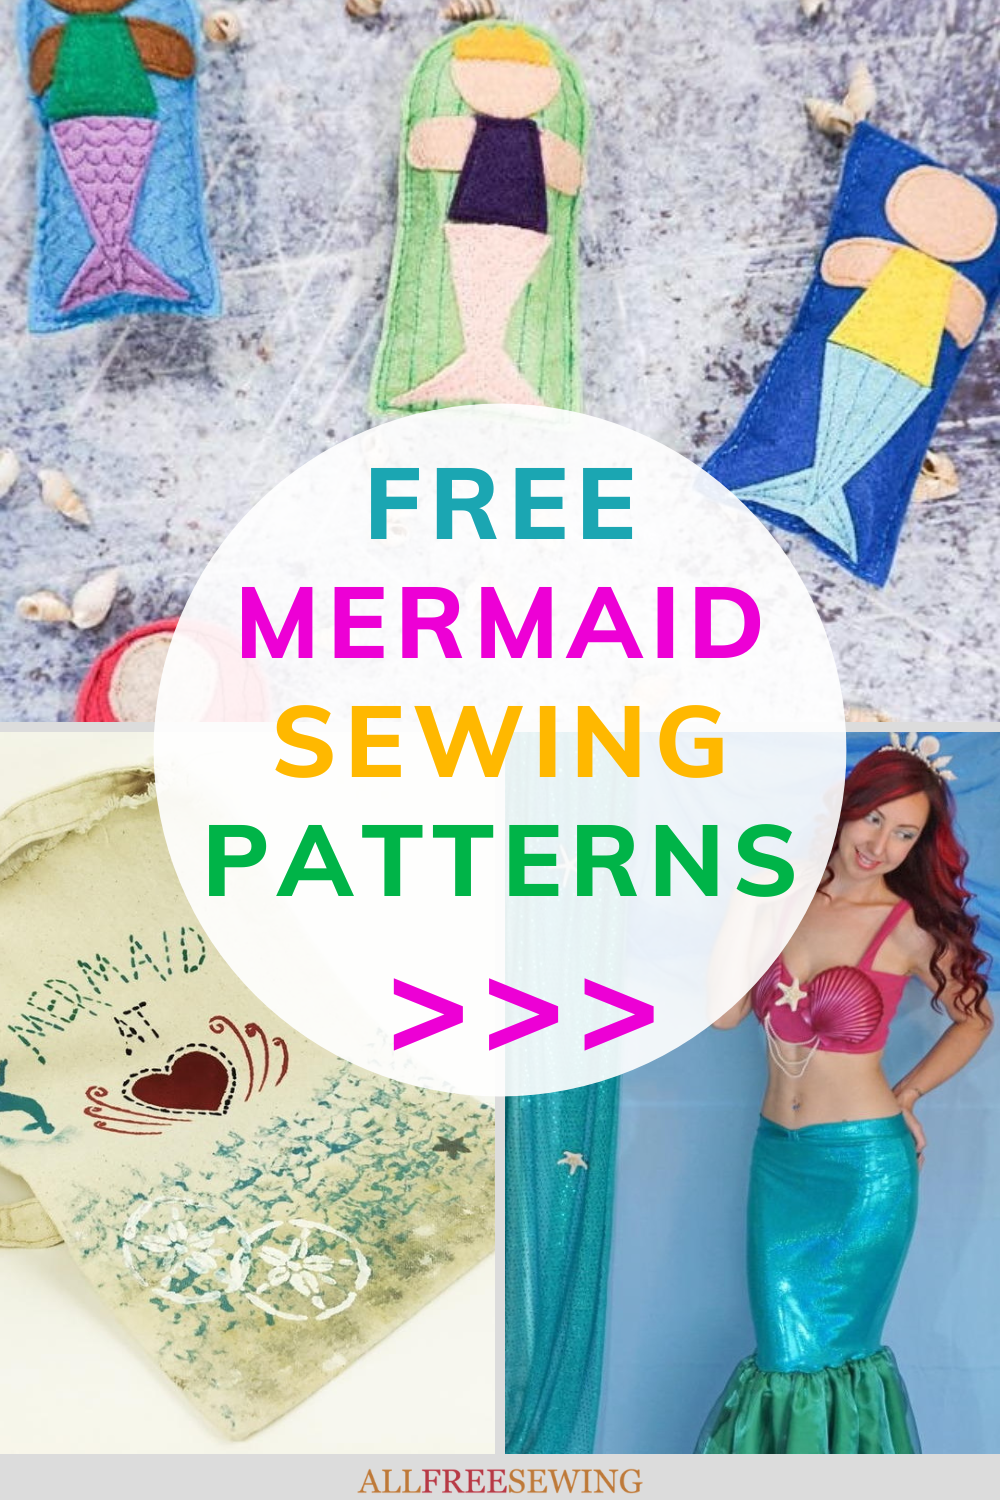 15-magical-mermaid-sewing-patterns-free-allfreesewing